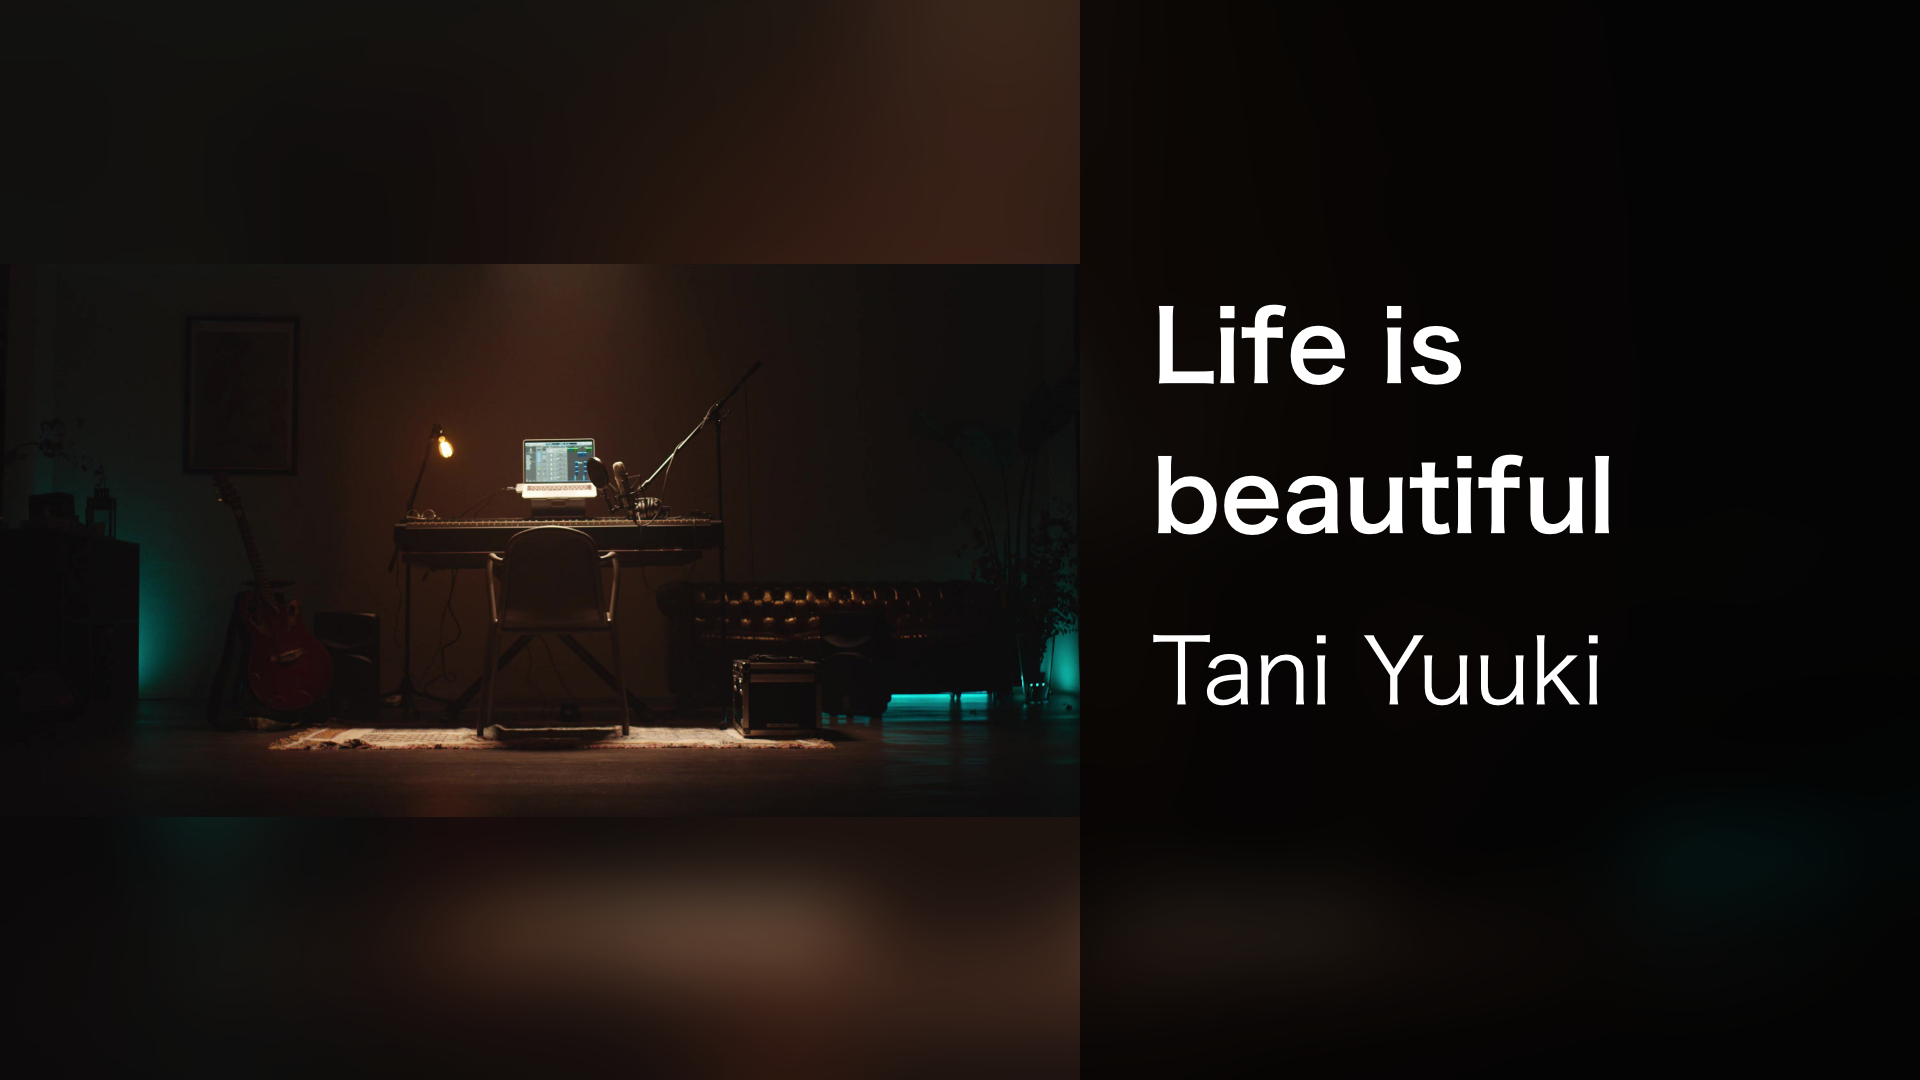 Life is beautiful(音楽・アイドル / 2020) - 動画配信 | U-NEXT